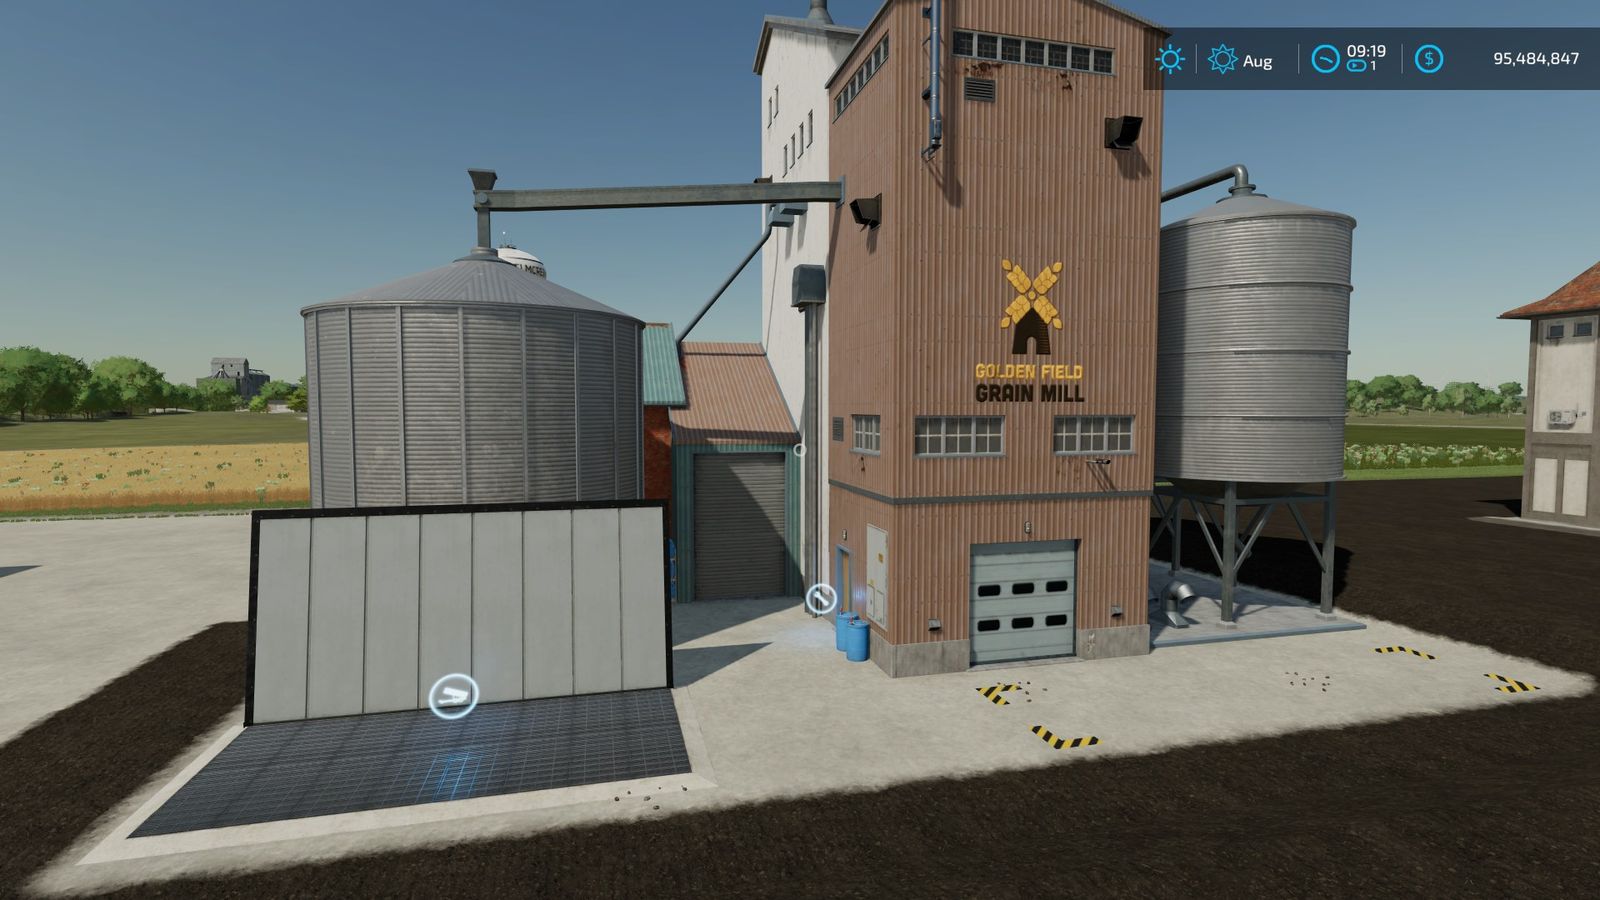 Farming simulator 22 oil grain mill 2